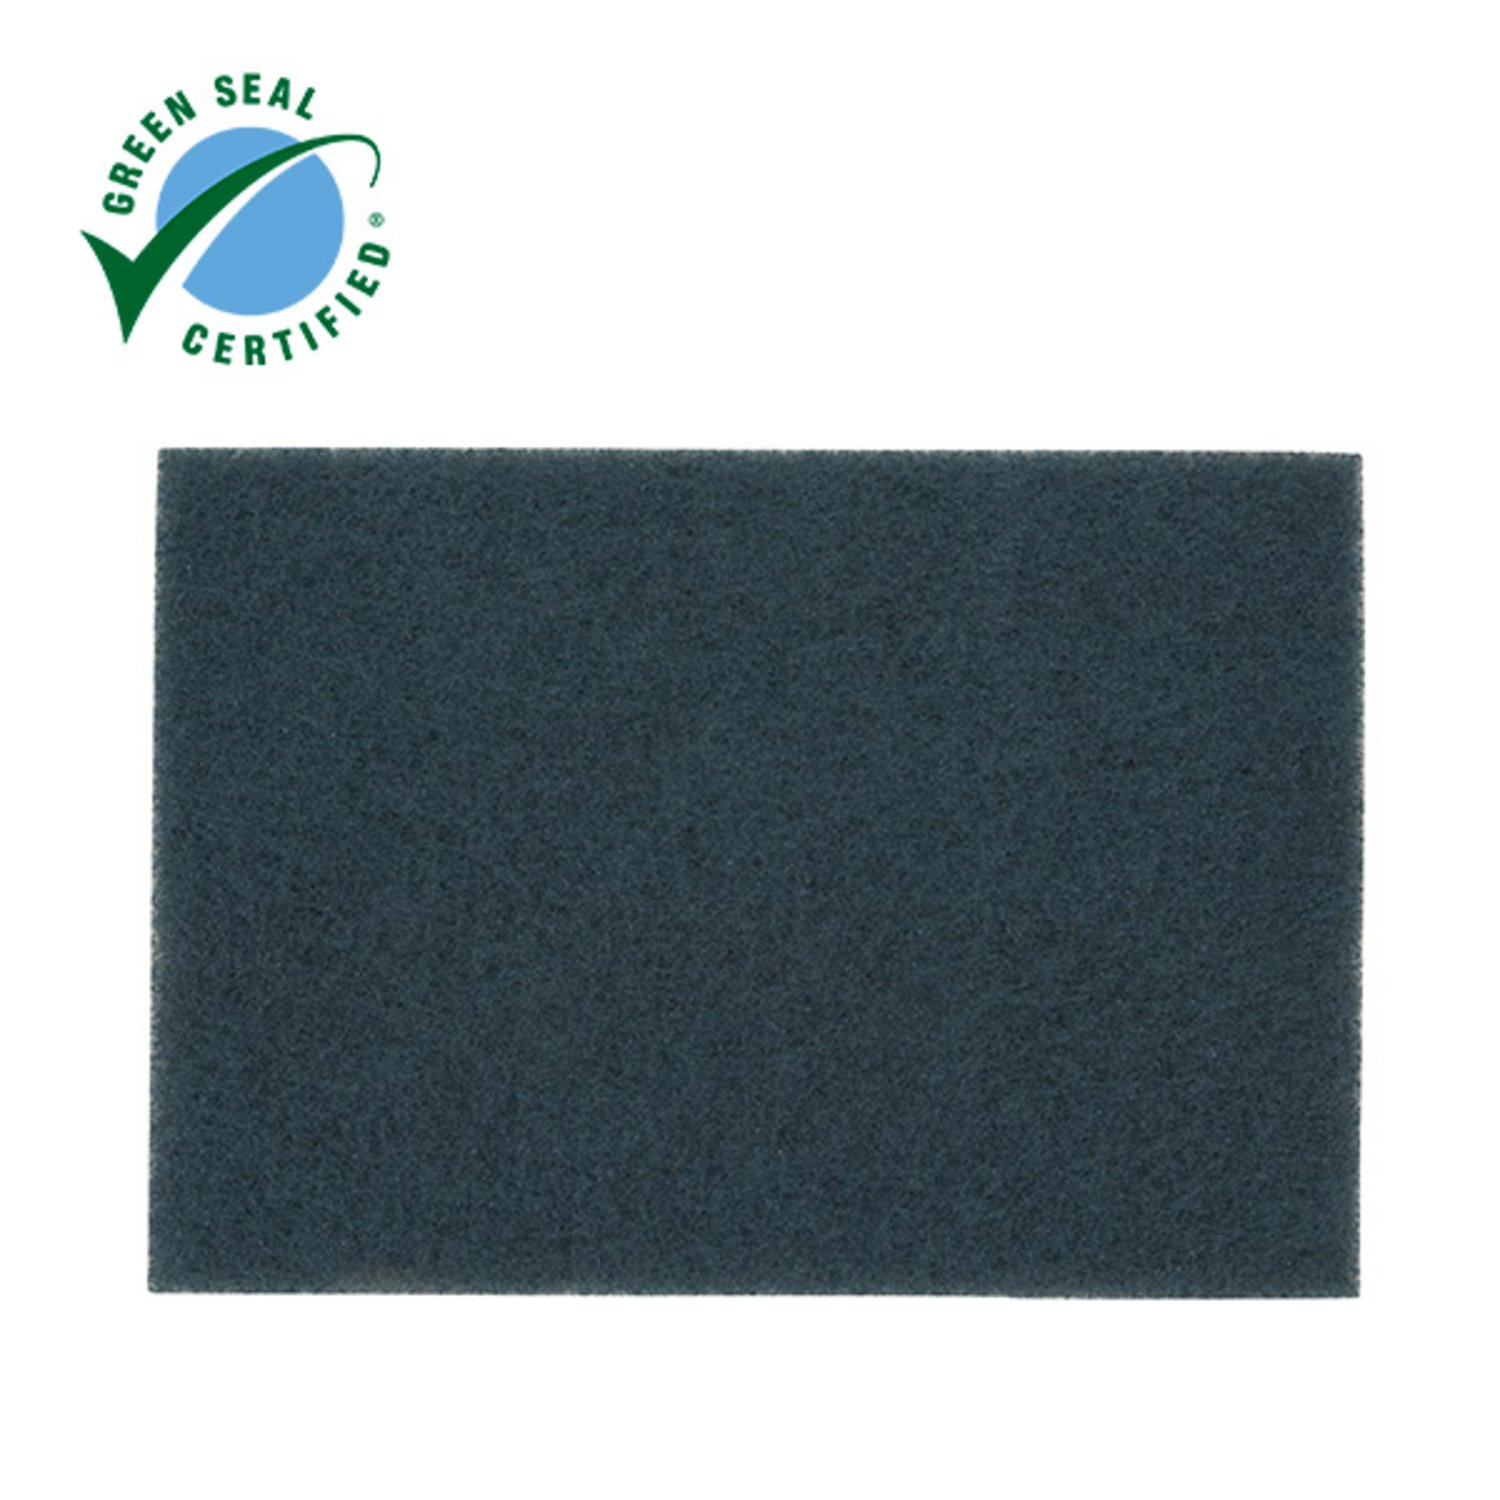 7000126841 - 3M Blue Cleaner Pad 5300, 28 in x 14 in, 10/Case